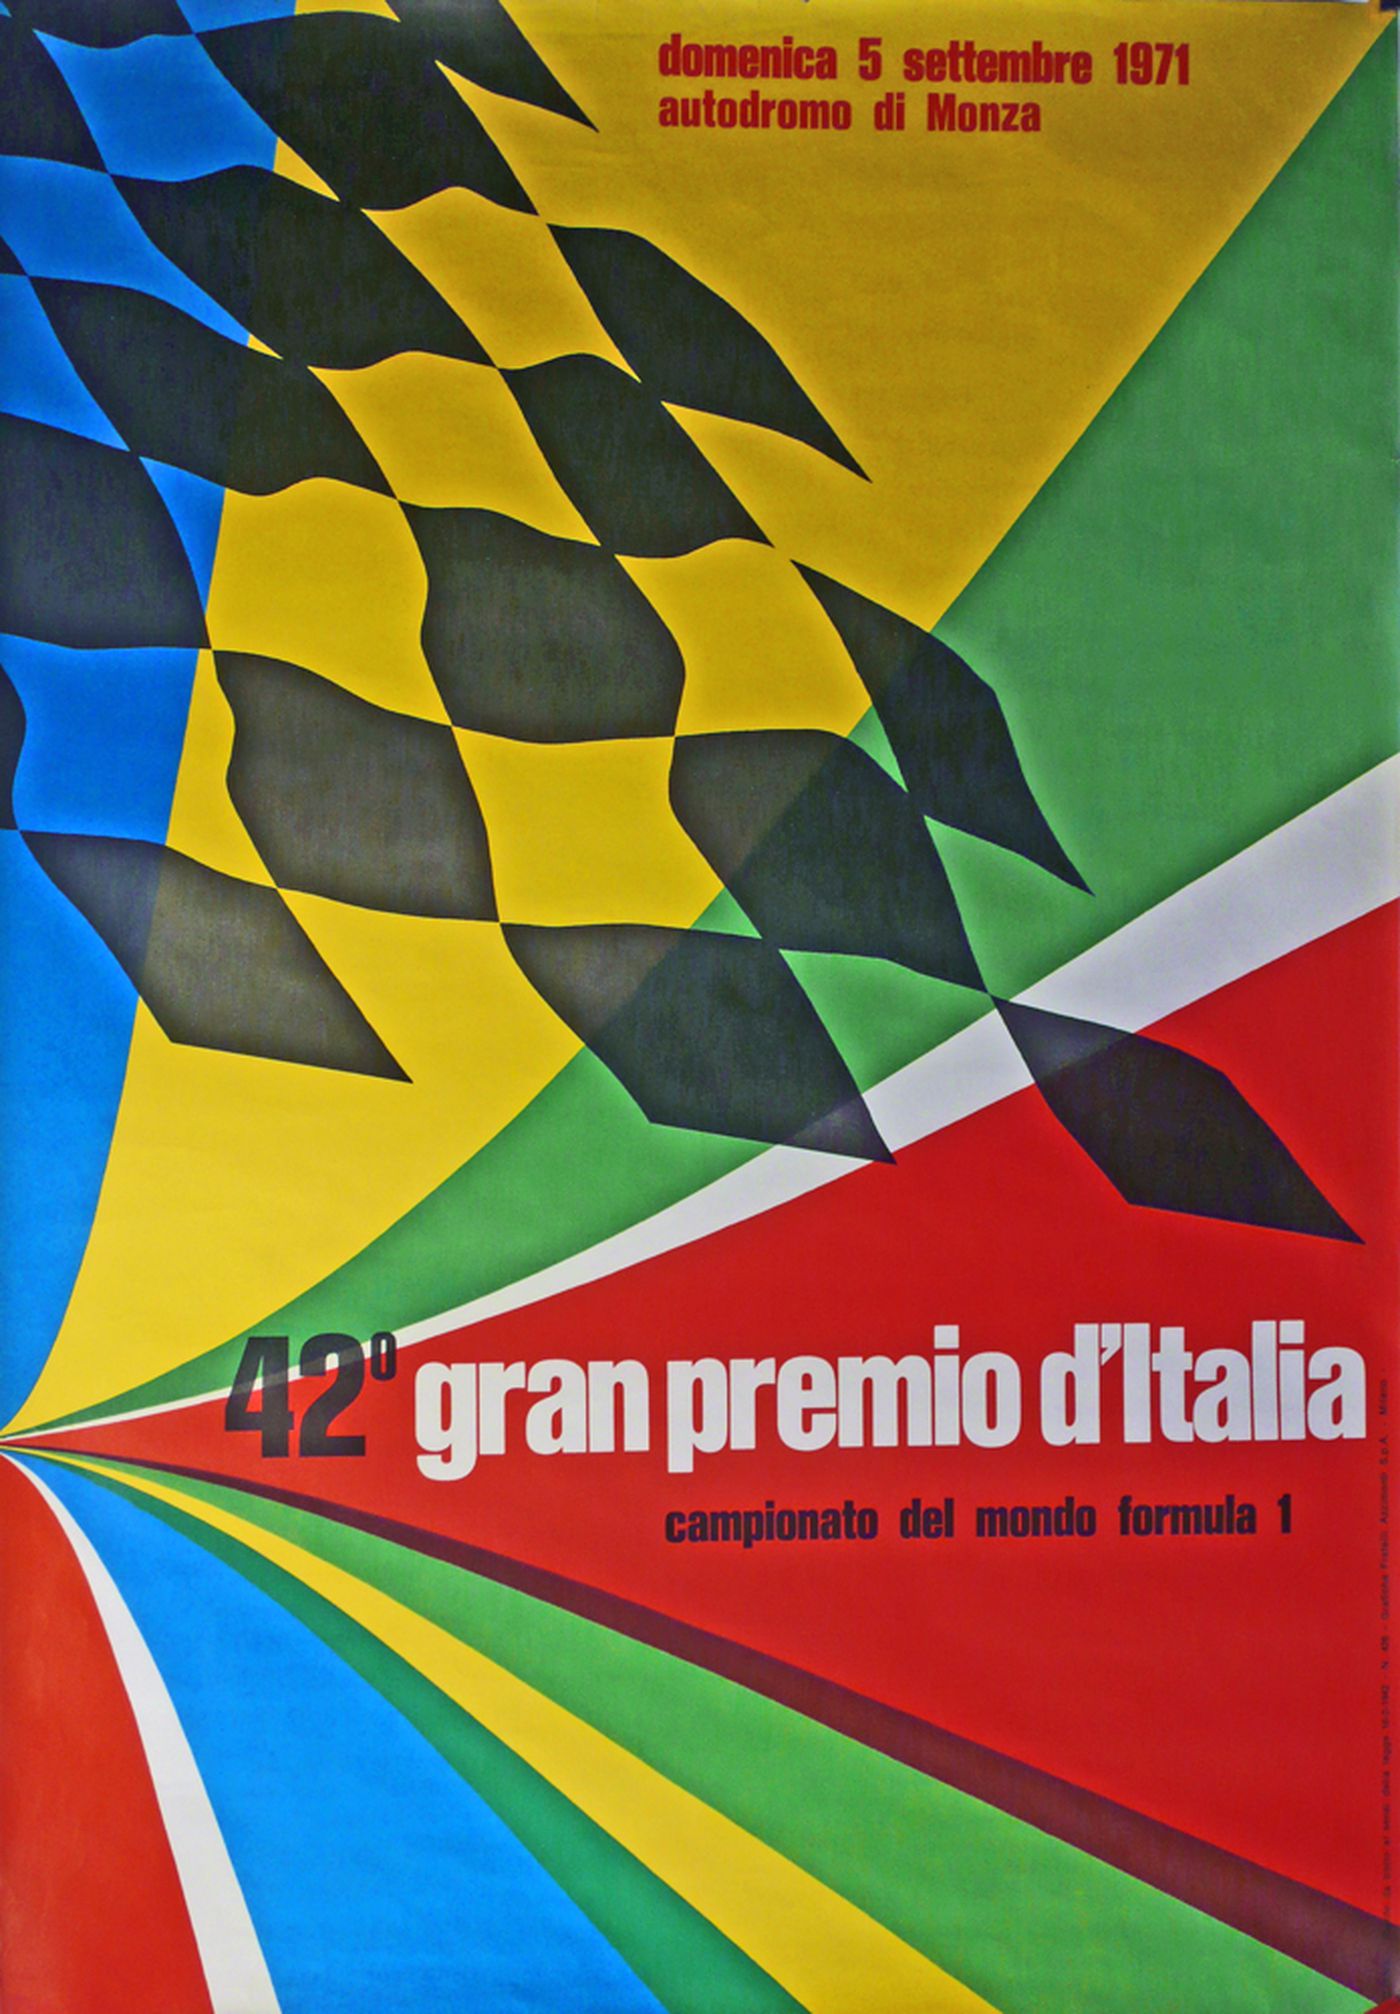 Italian GP collectors poster